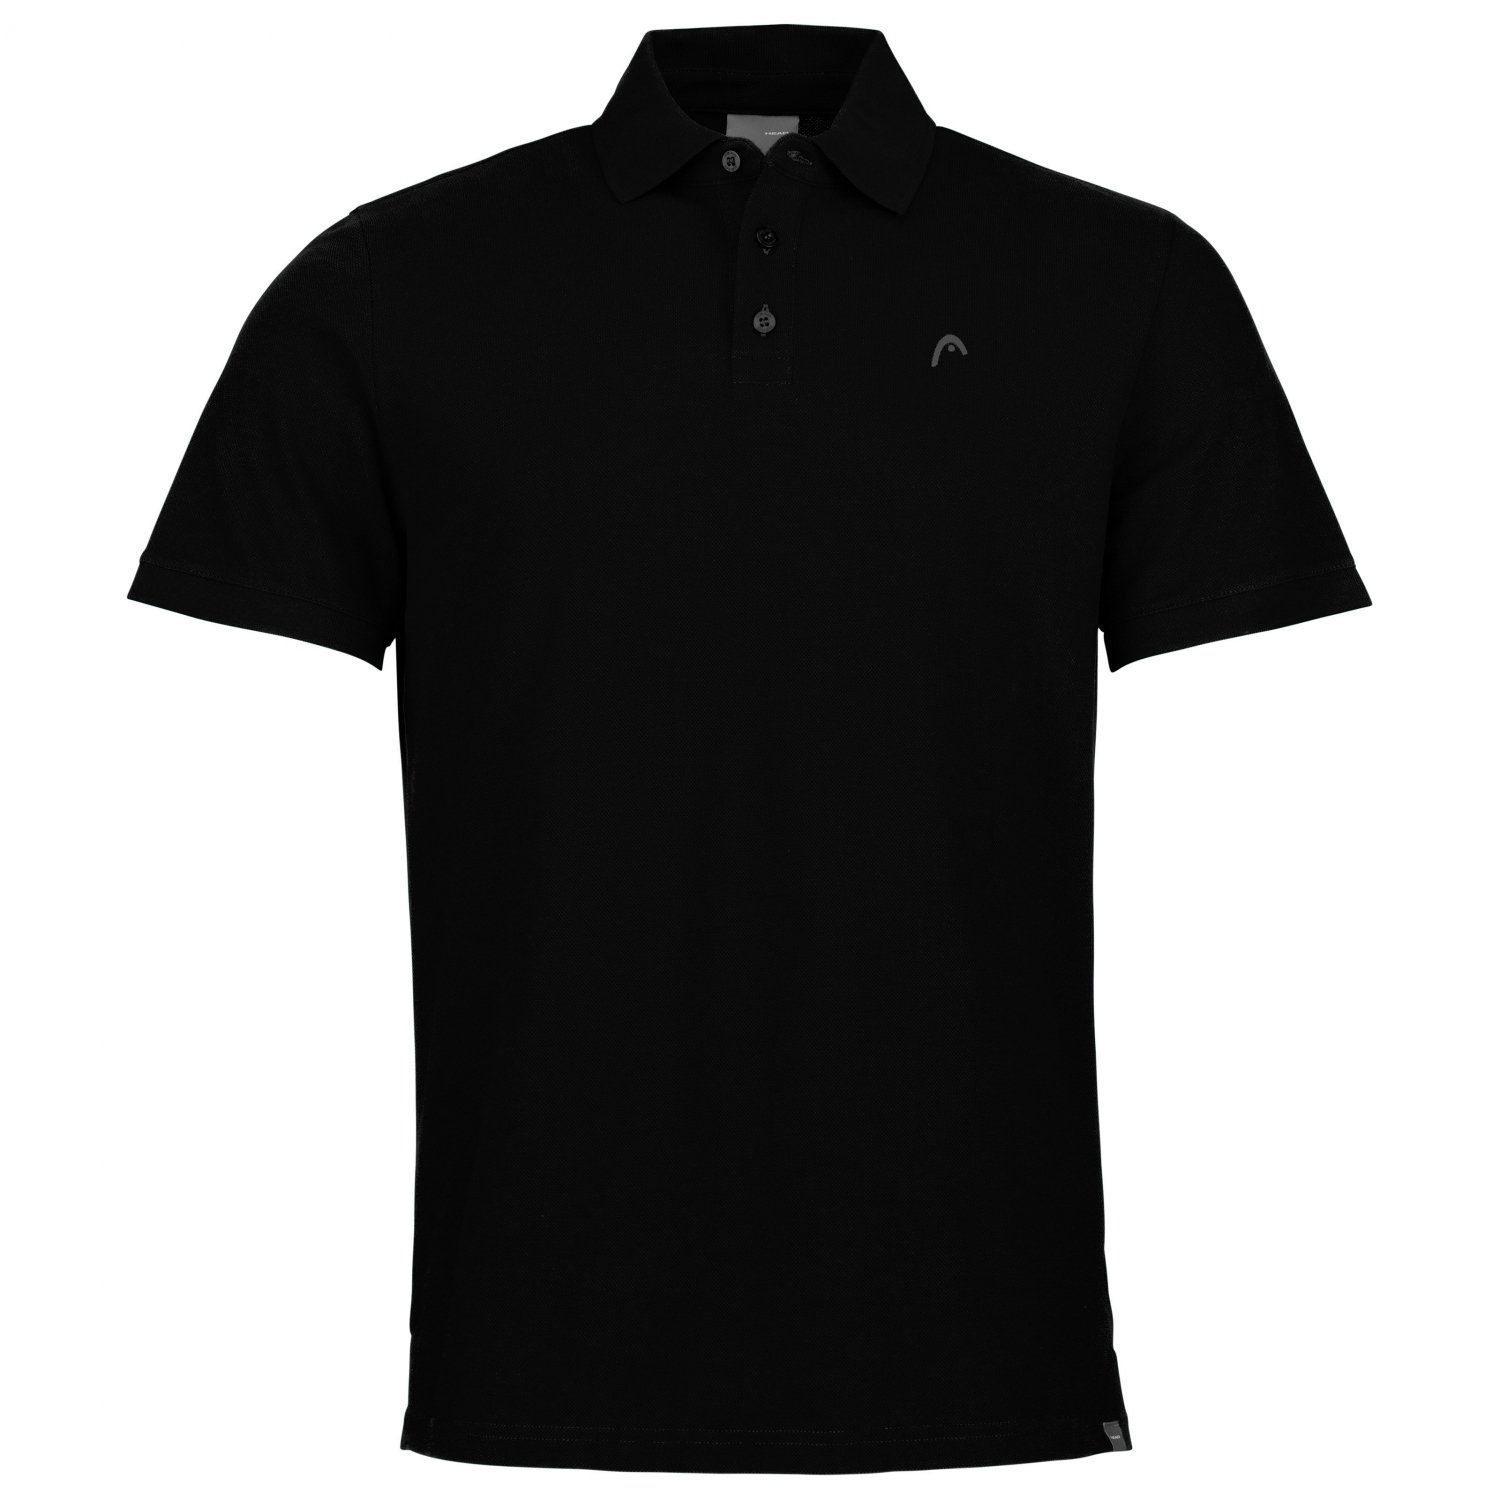 Head Tennisshirt Head Herren Polo Shirt BK black